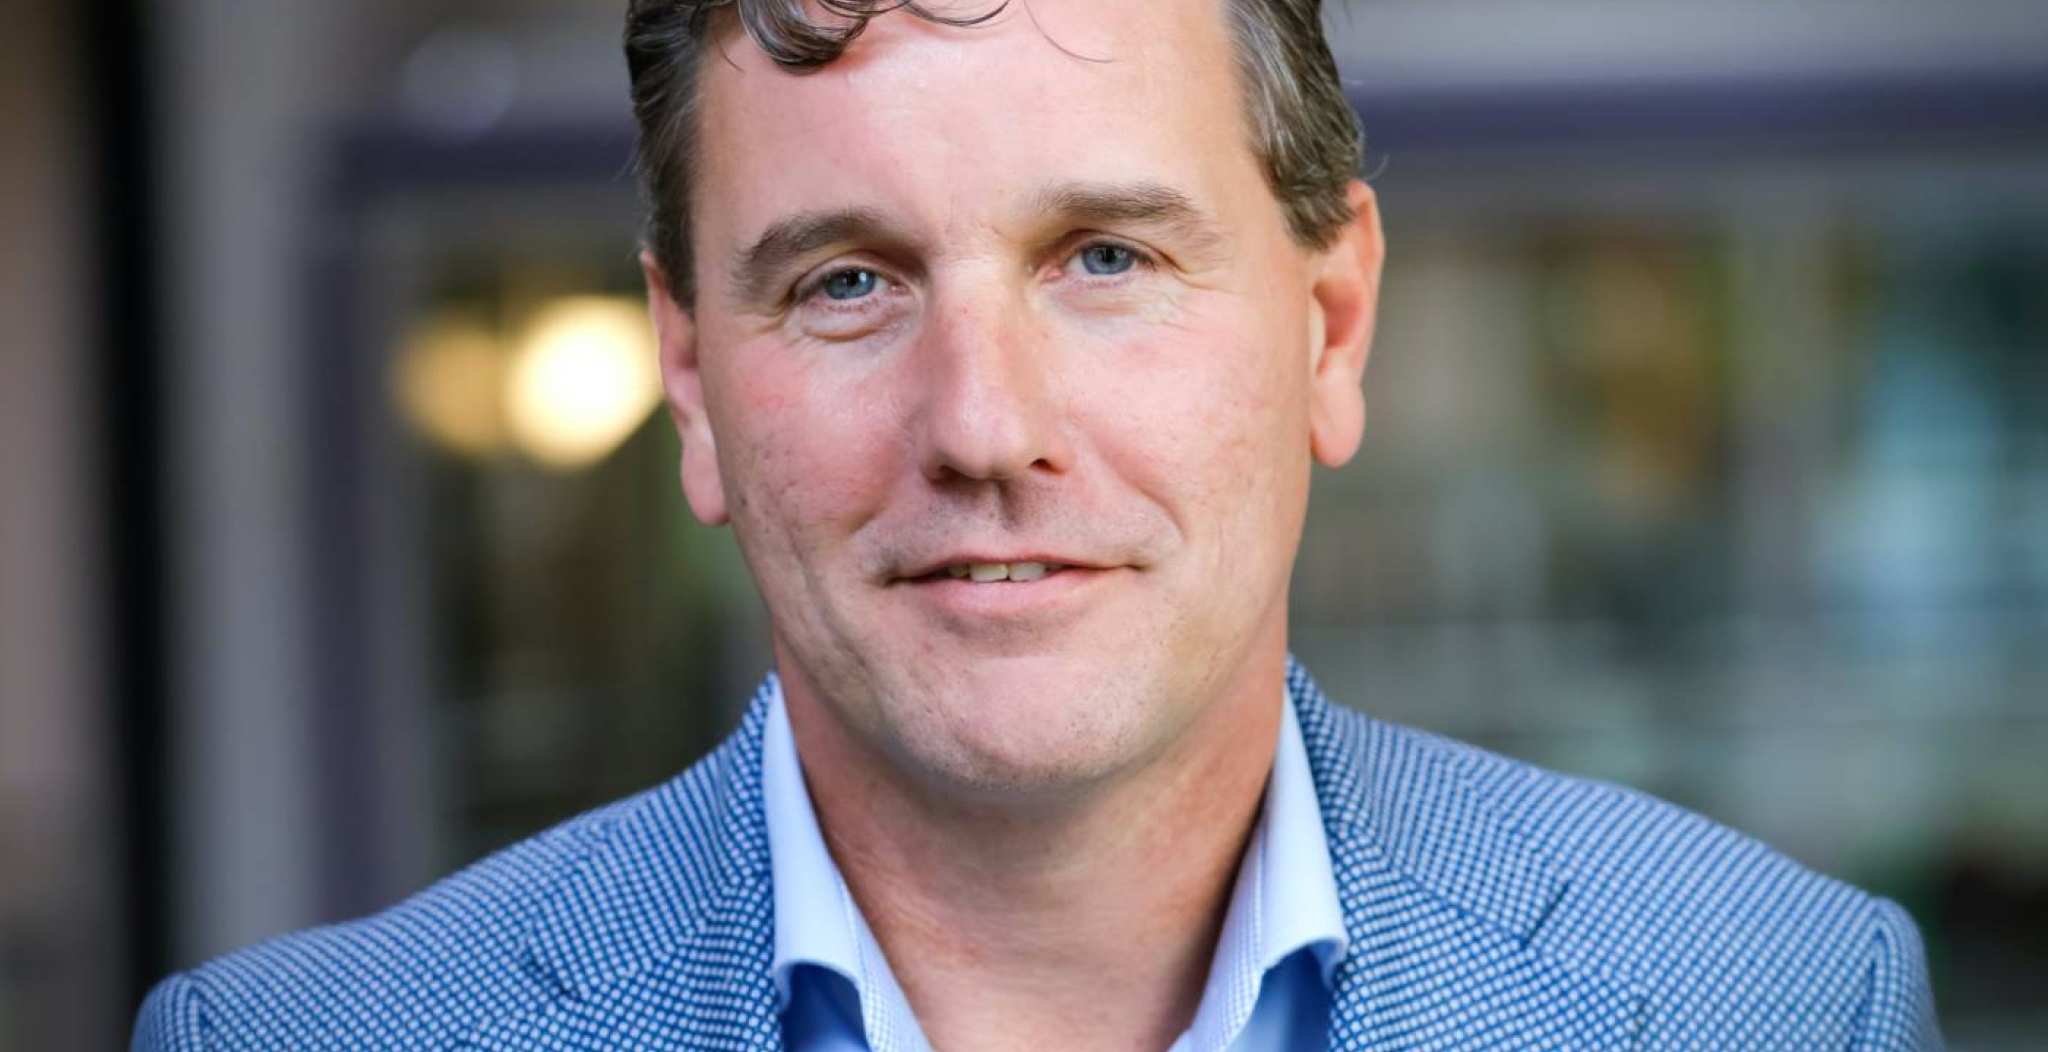 Profielfoto van associate lector Sustainable Finance & Tax Fred de Jong.